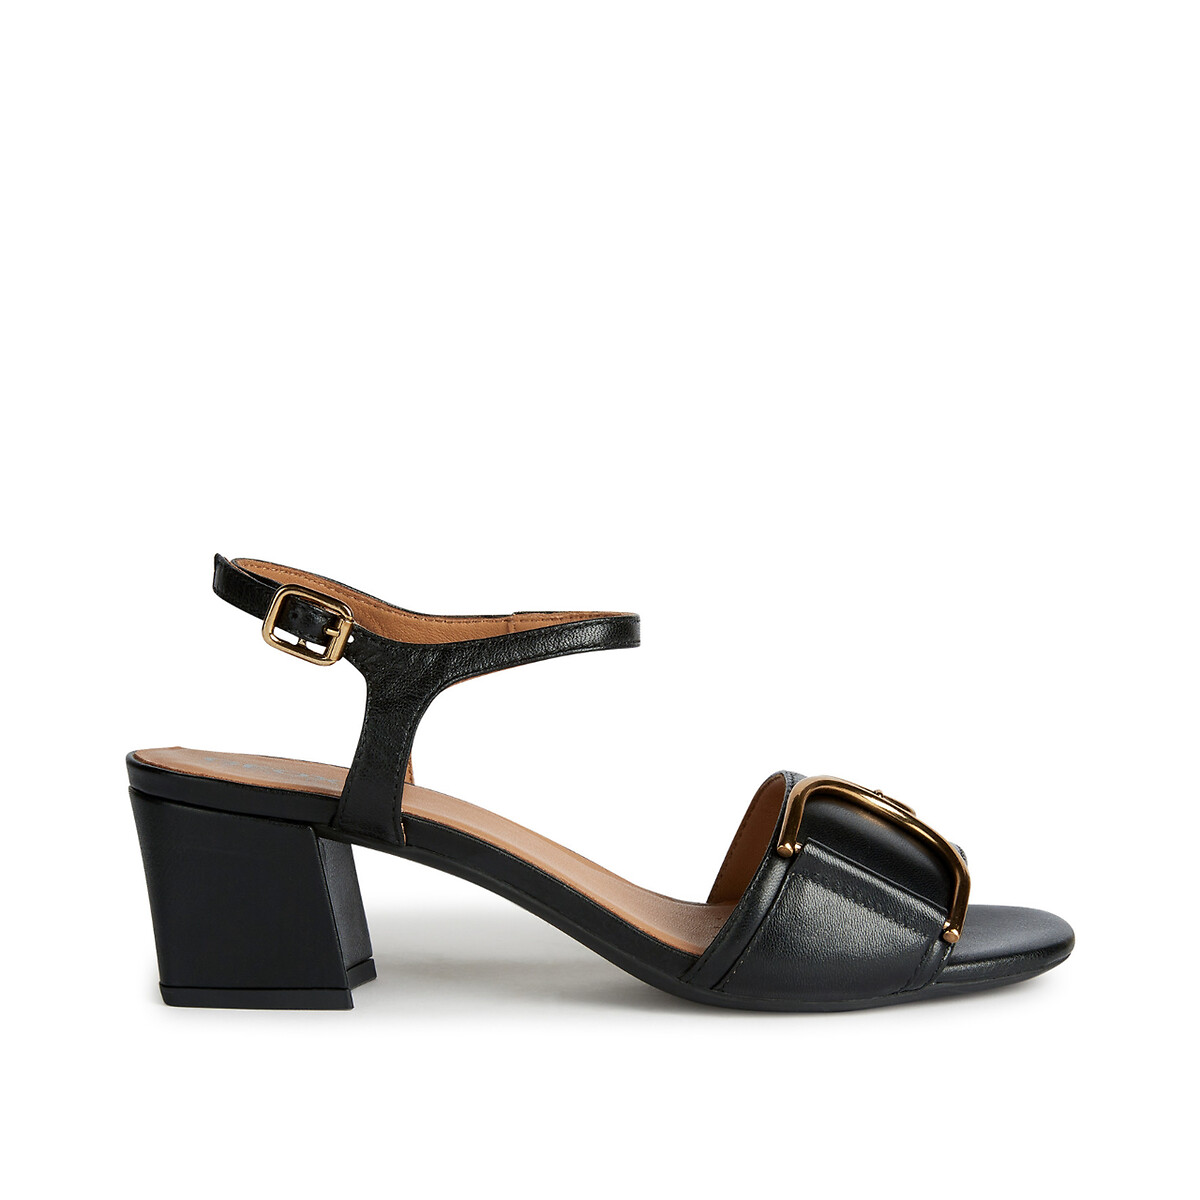 New eraklia breathable sandals in leather with block heel, black, Geox ...